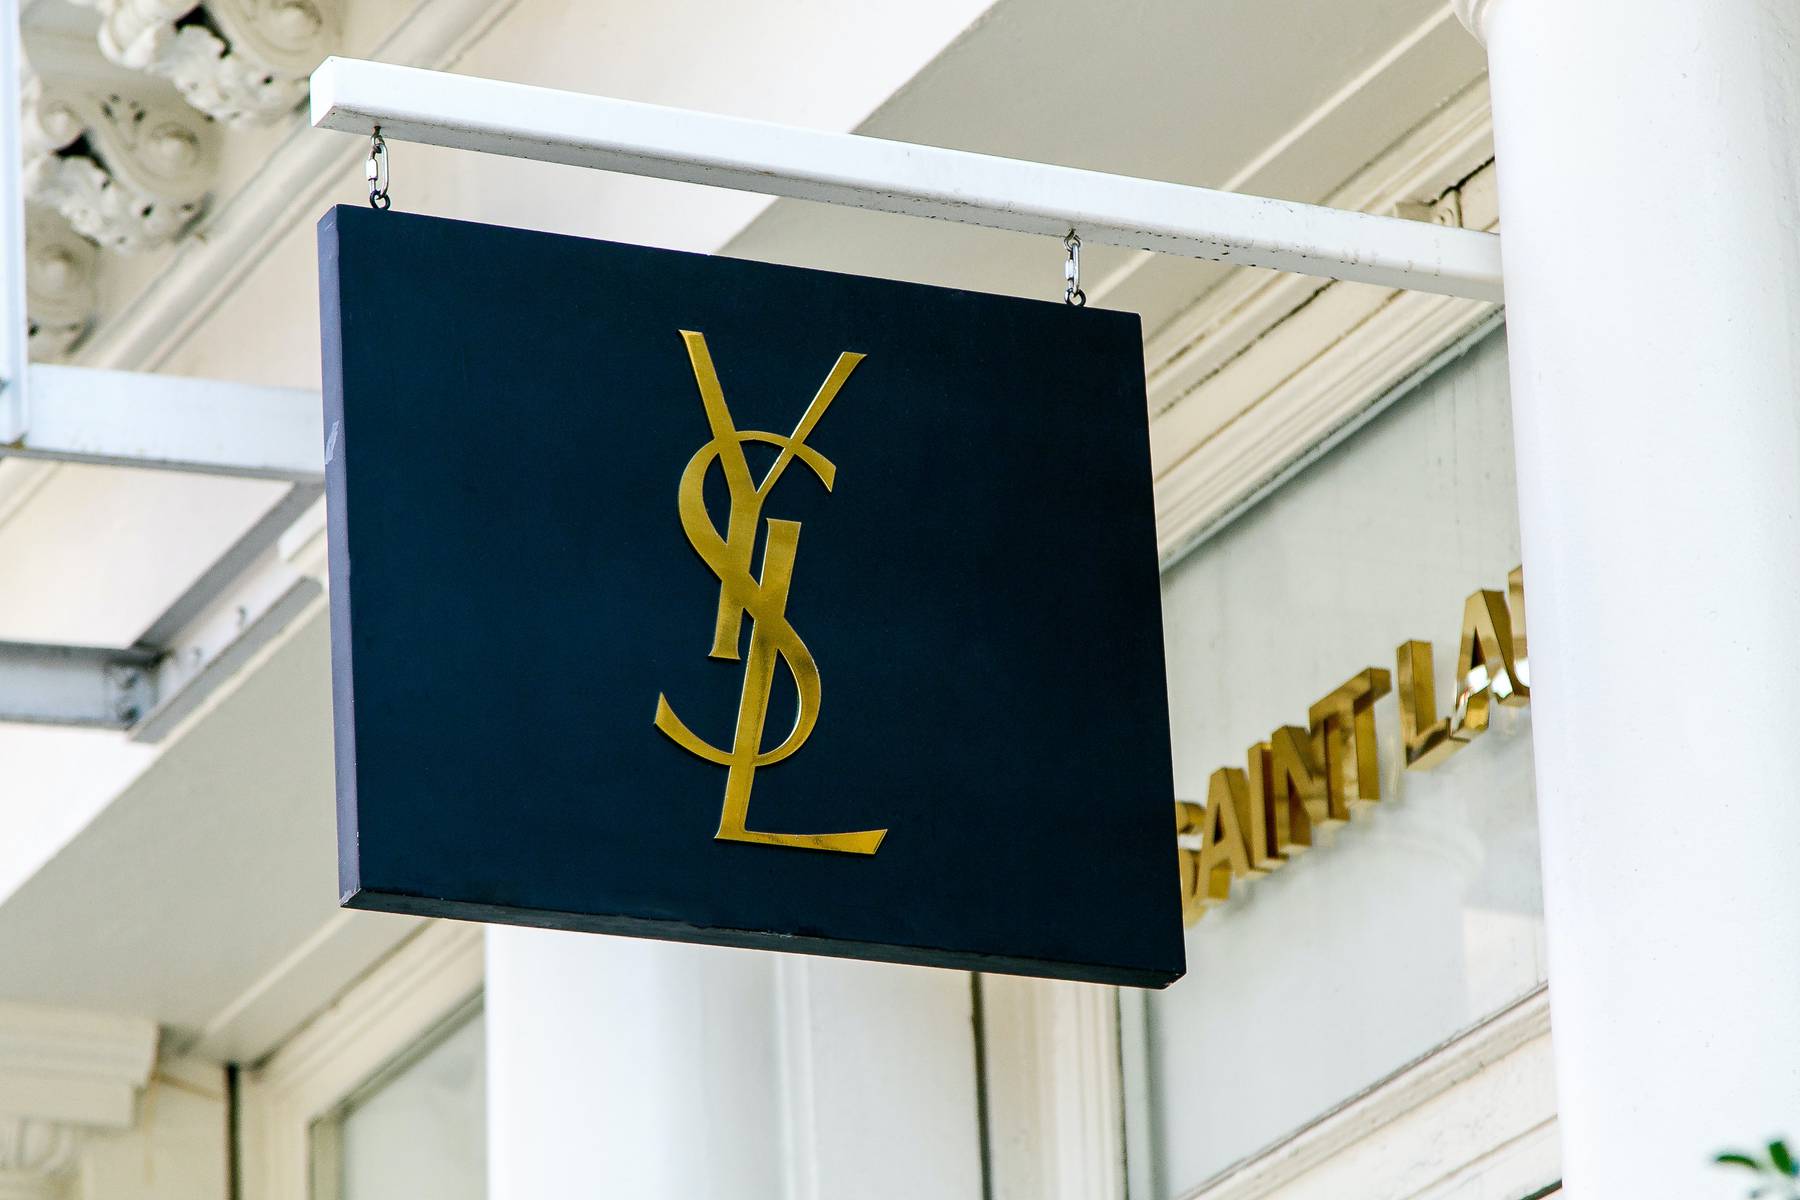 Yves Saint Laurent store sign.